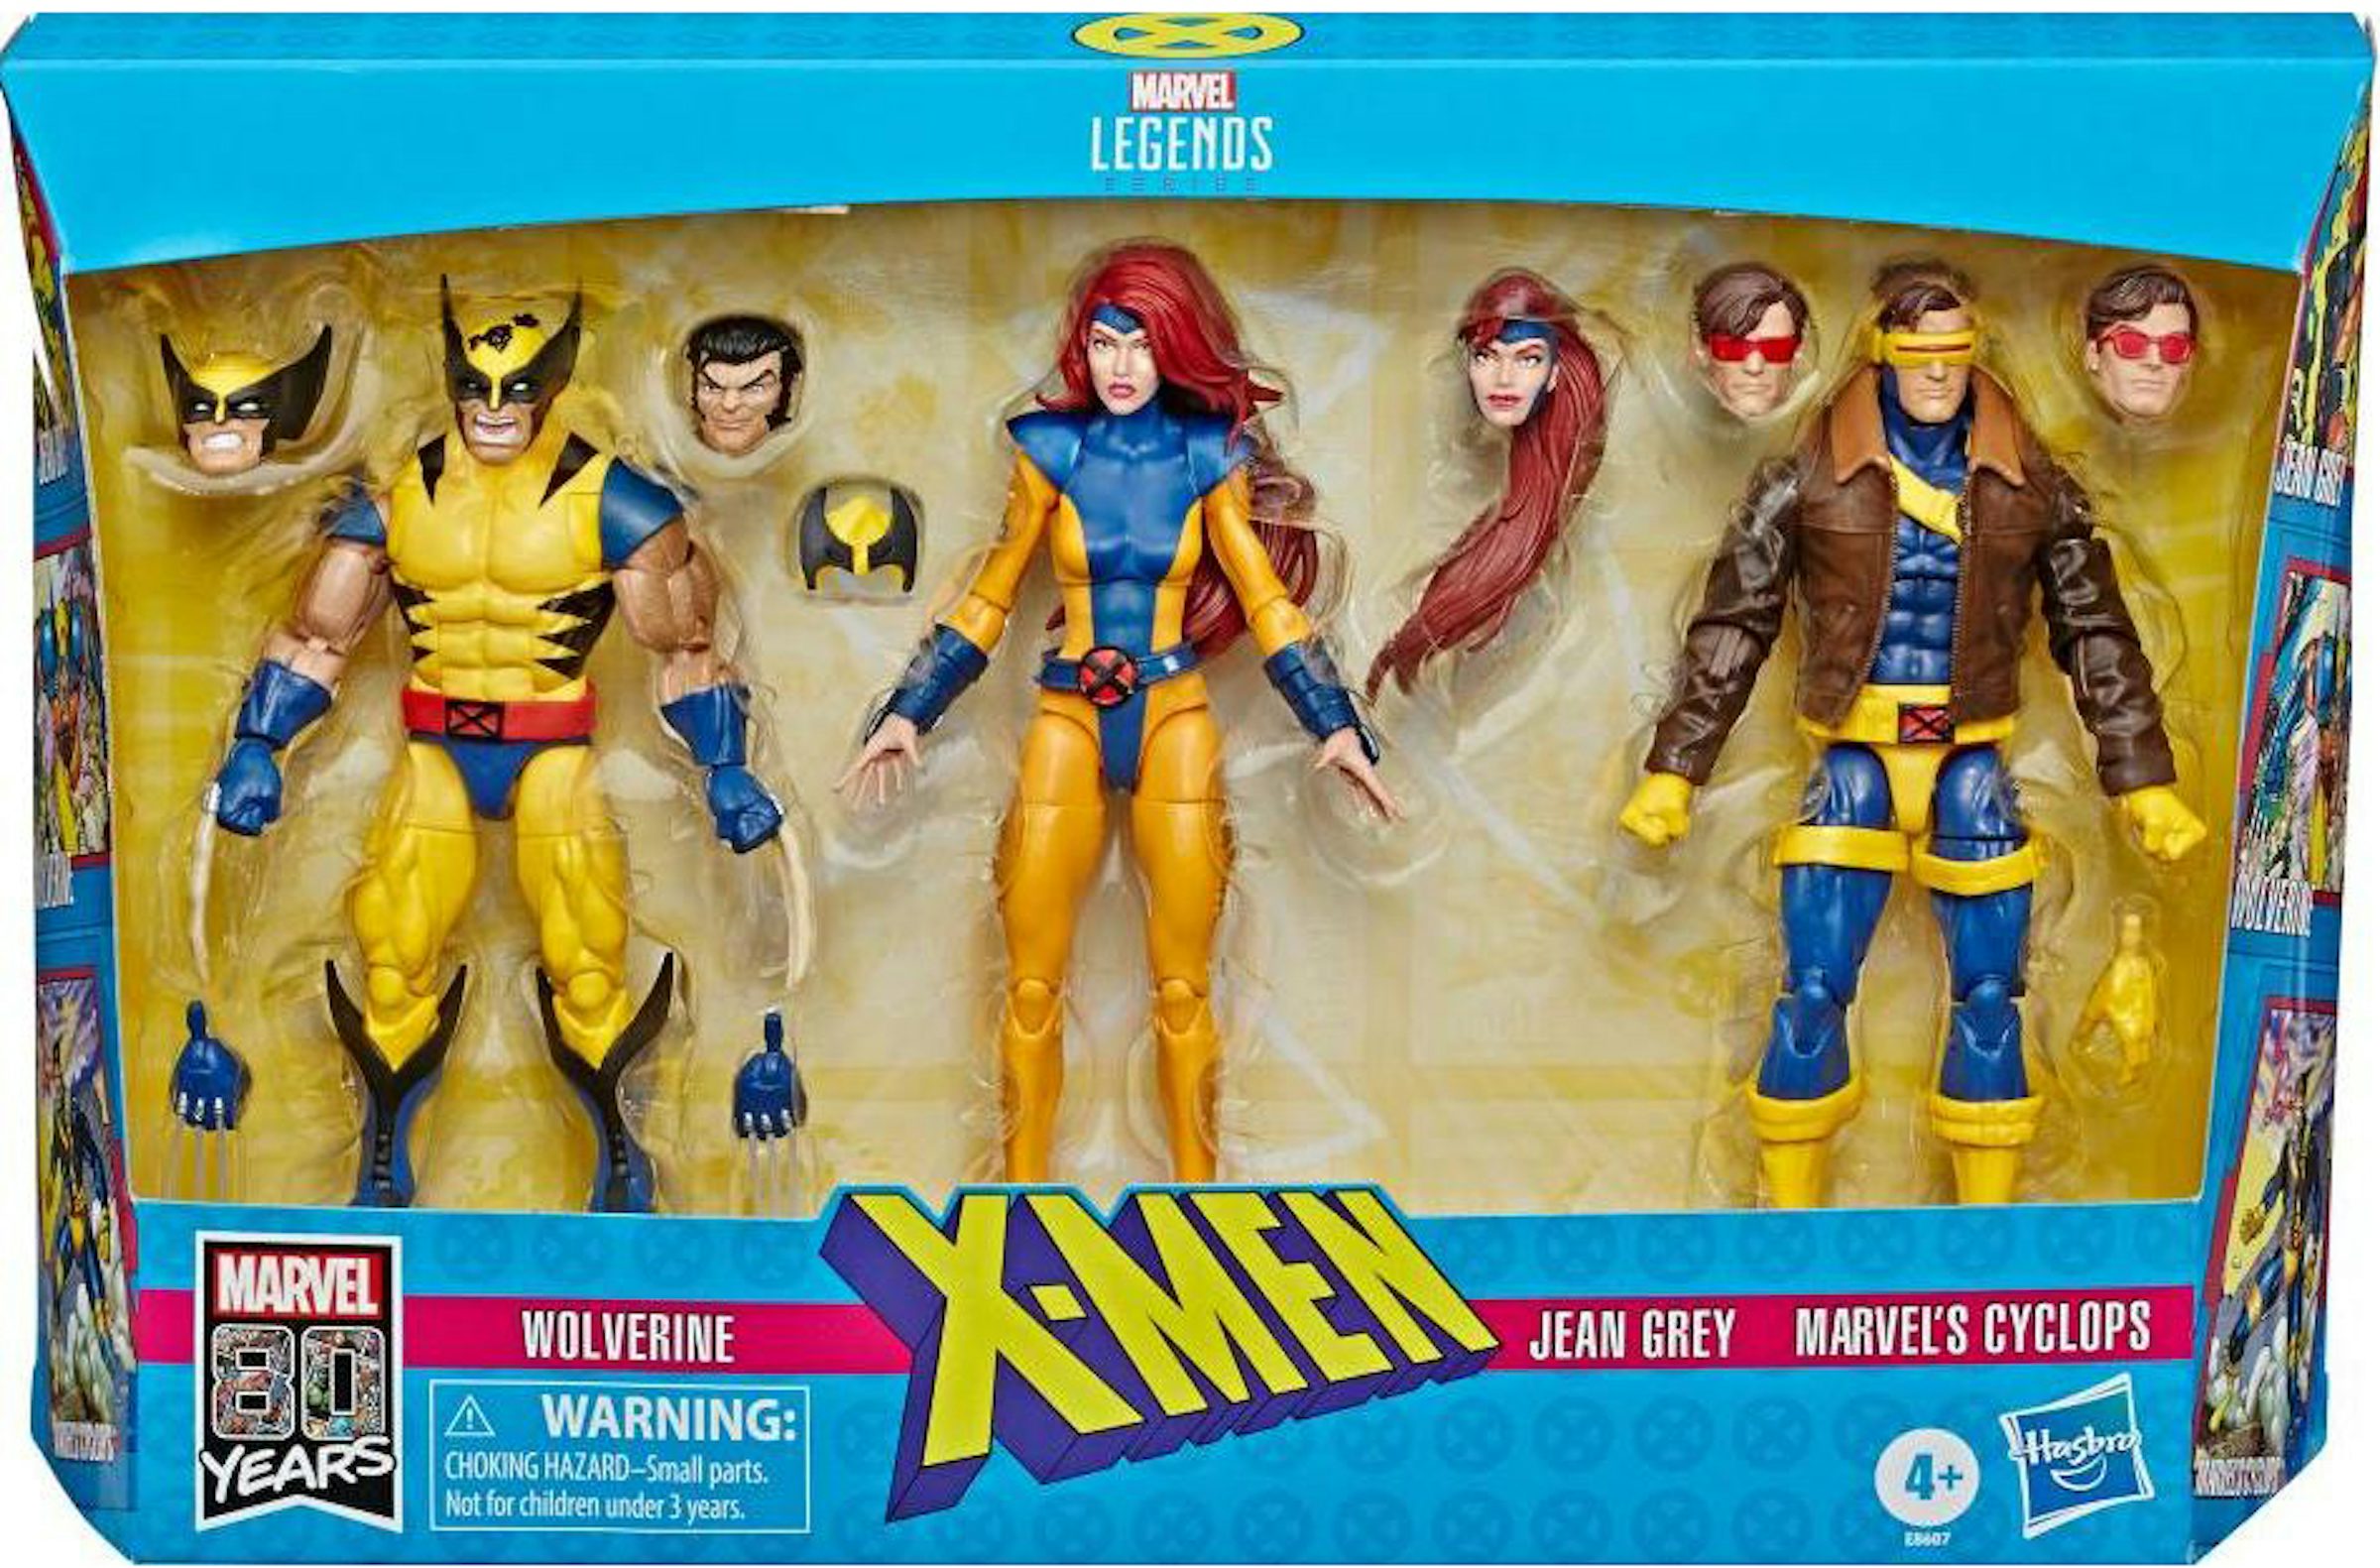 https://images.stockx.com/images/Hasbro-Marvel-Legends-X-Men-Wolverine-Jean-Grey-Marvels-Cyclops-3-Pack-Action-Figure.jpg?fit=fill&bg=FFFFFF&w=1200&h=857&fm=jpg&auto=compress&dpr=2&trim=color&updated_at=1629985903&q=60